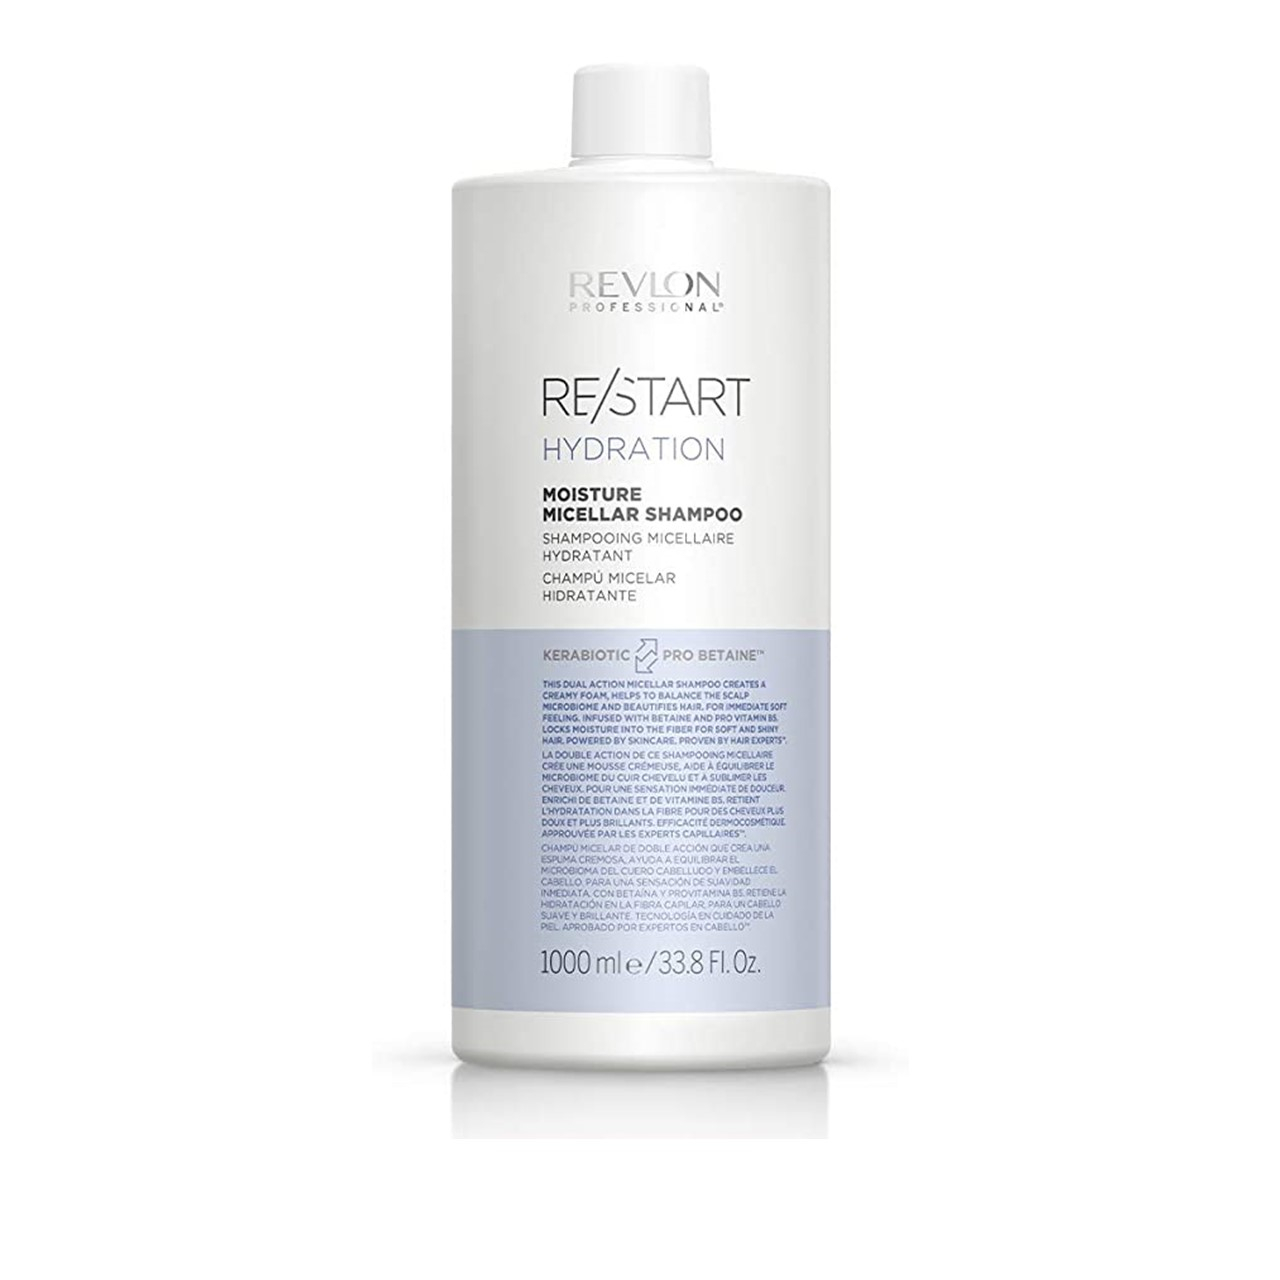 Revlon Professional Re/Start Hydration Moisture Micellar Shampoo 1L (33.81fl oz)